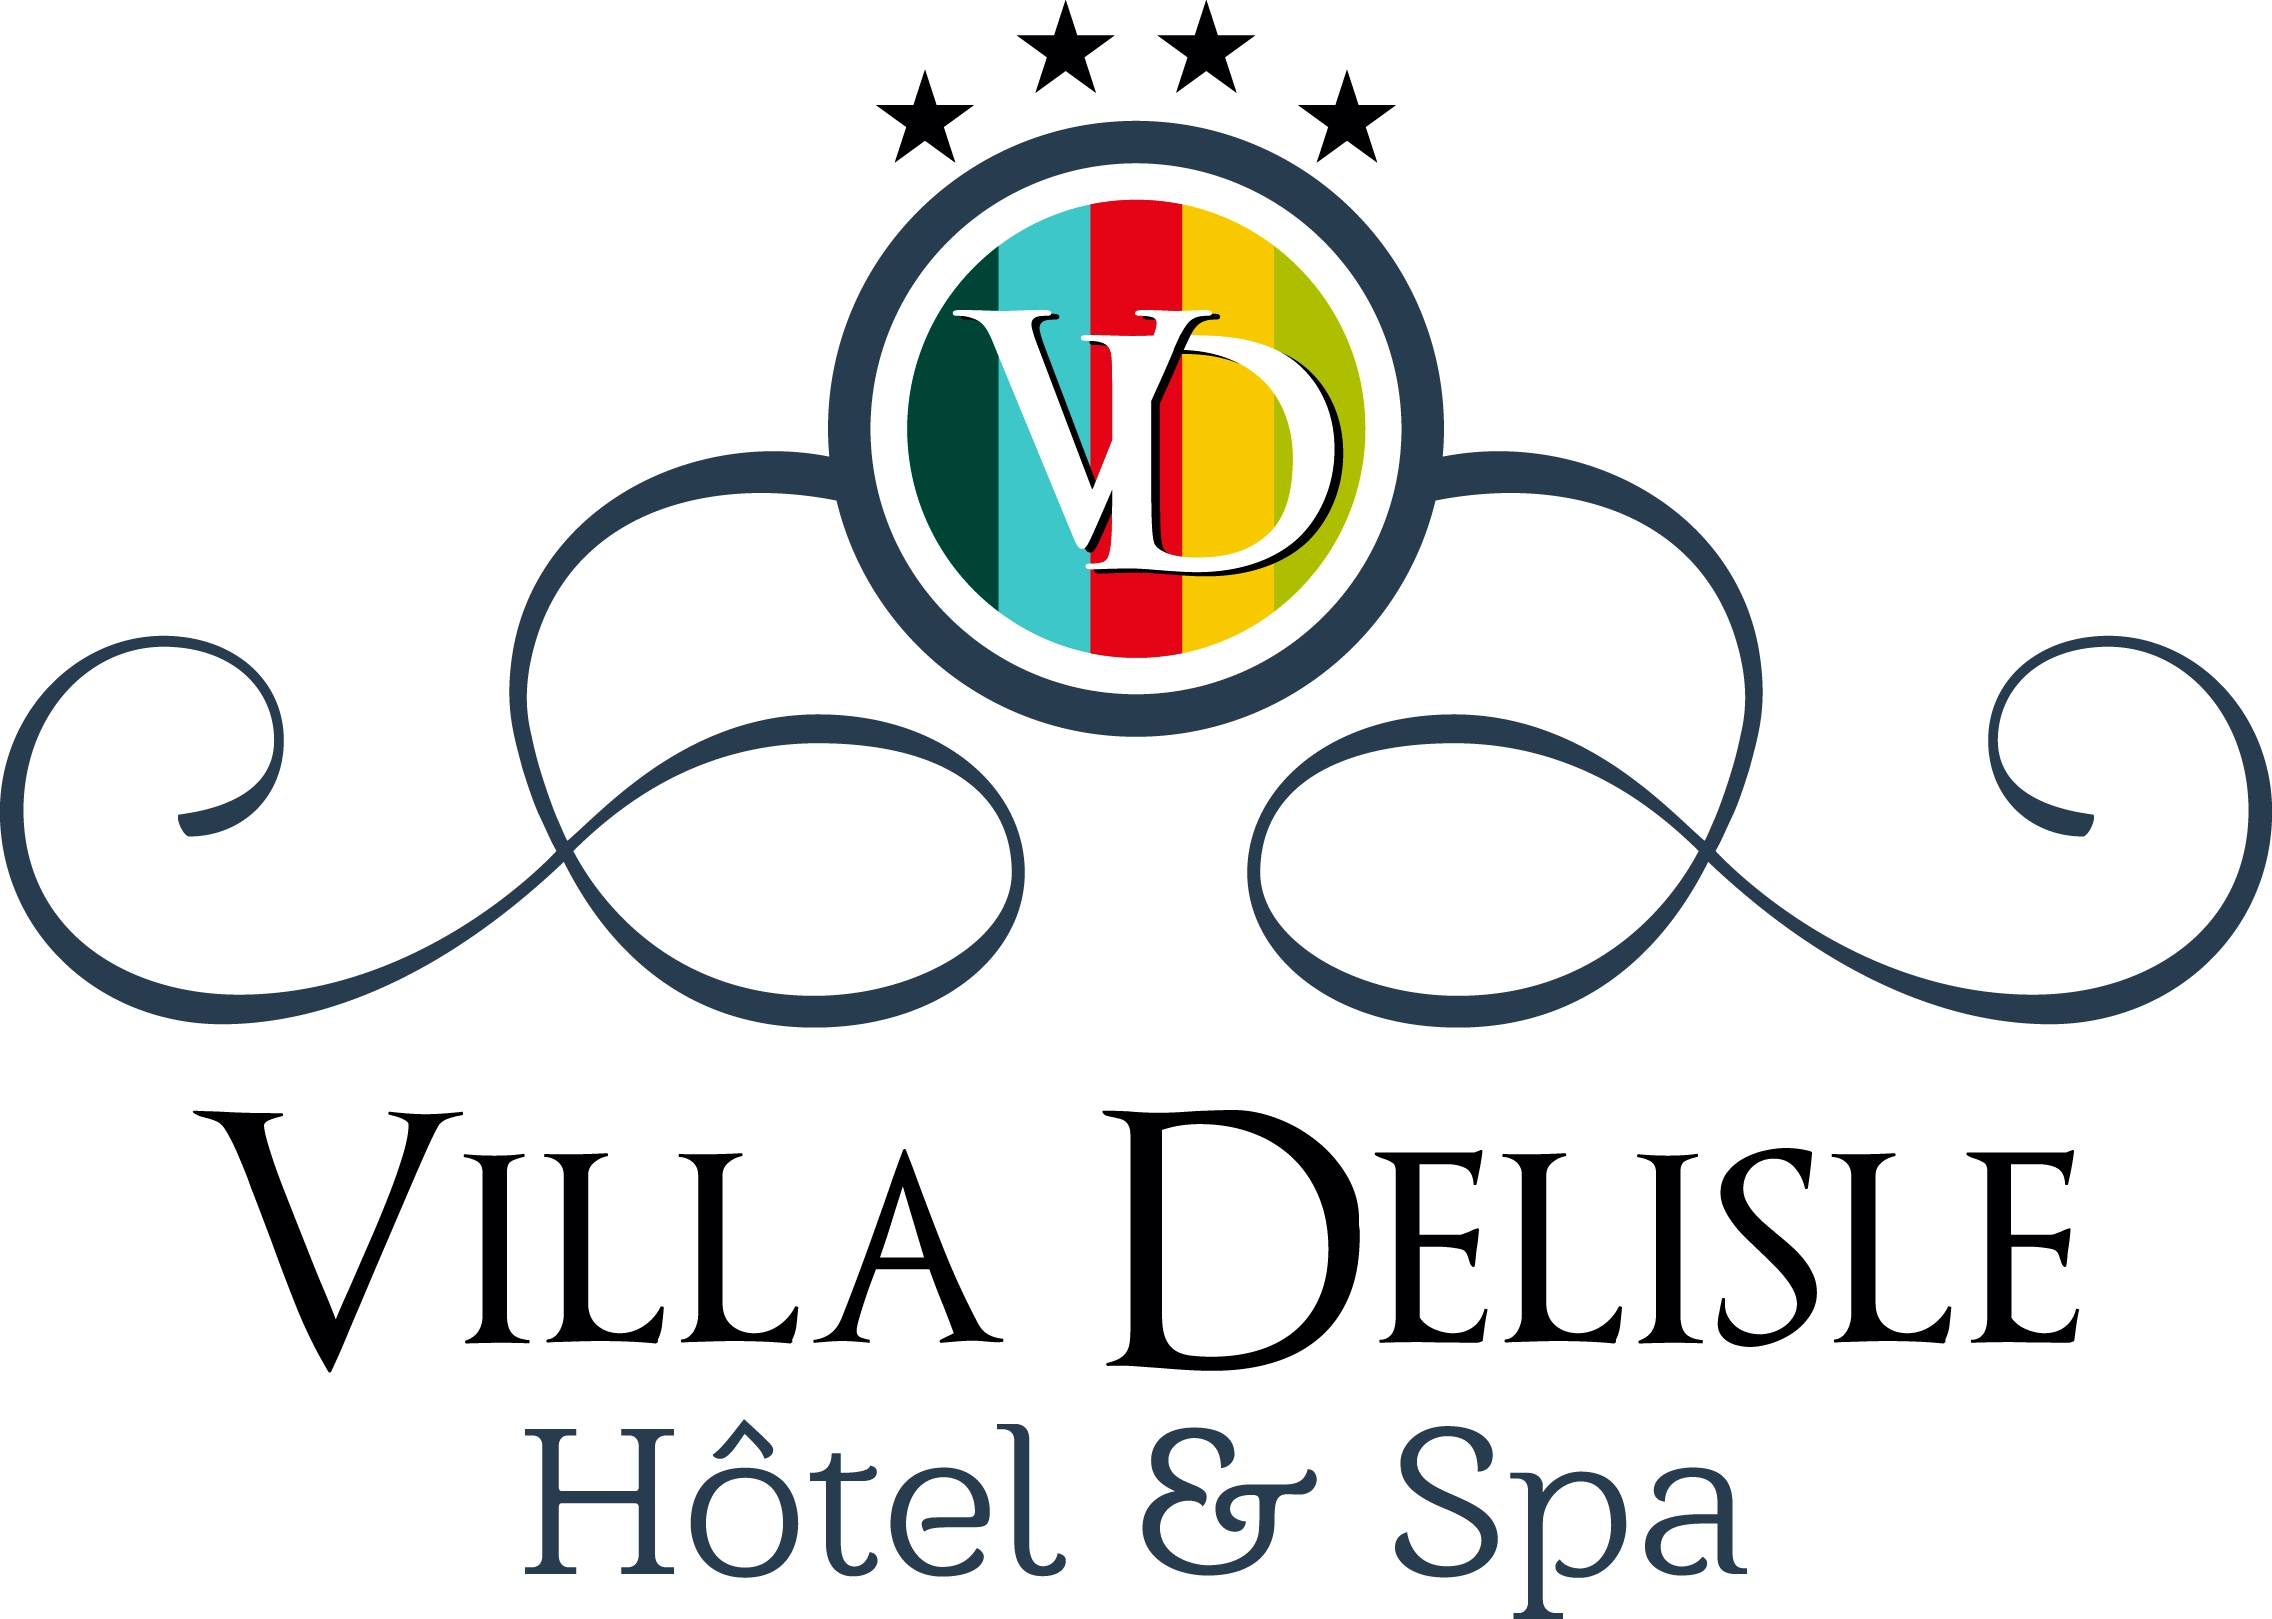 VILLA DELISLE Hôtel & Spa - ALIZOA